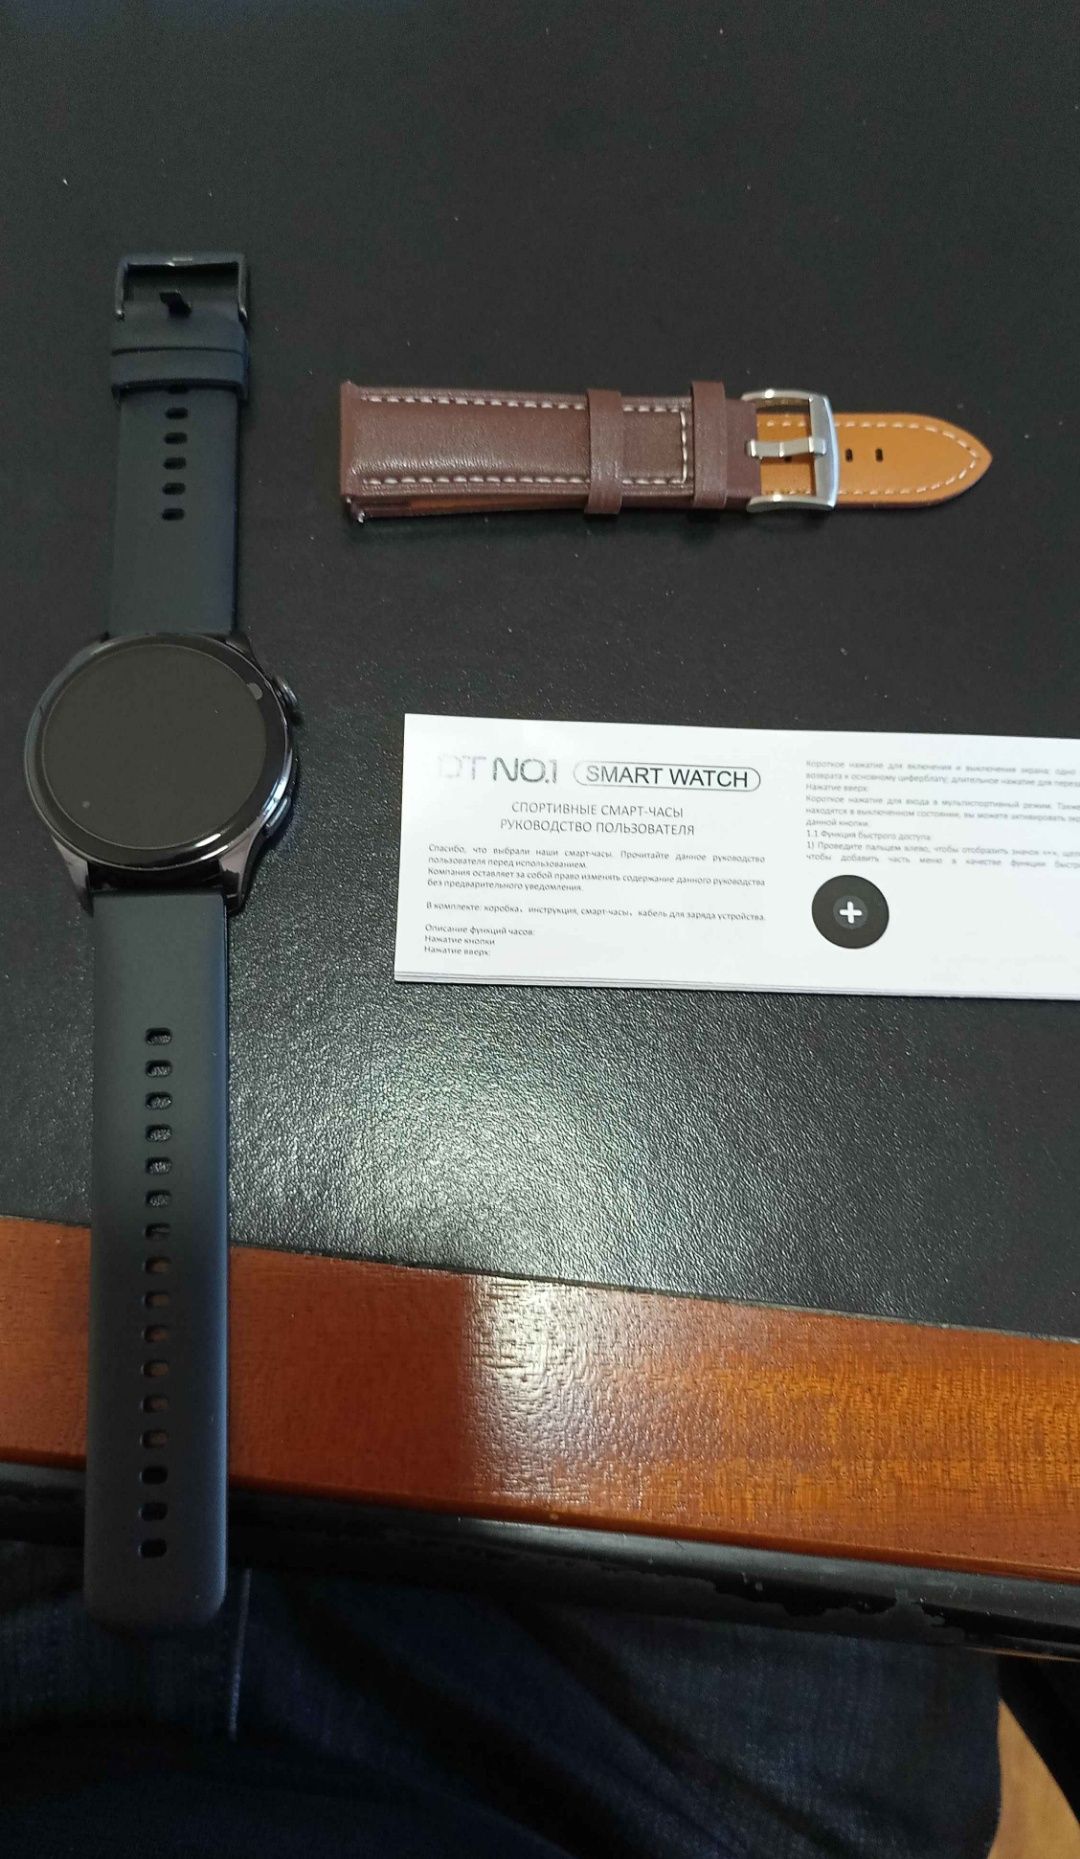 Smart Watch DT NewT WEAR PRO  orginali hamma dokumenti bor.